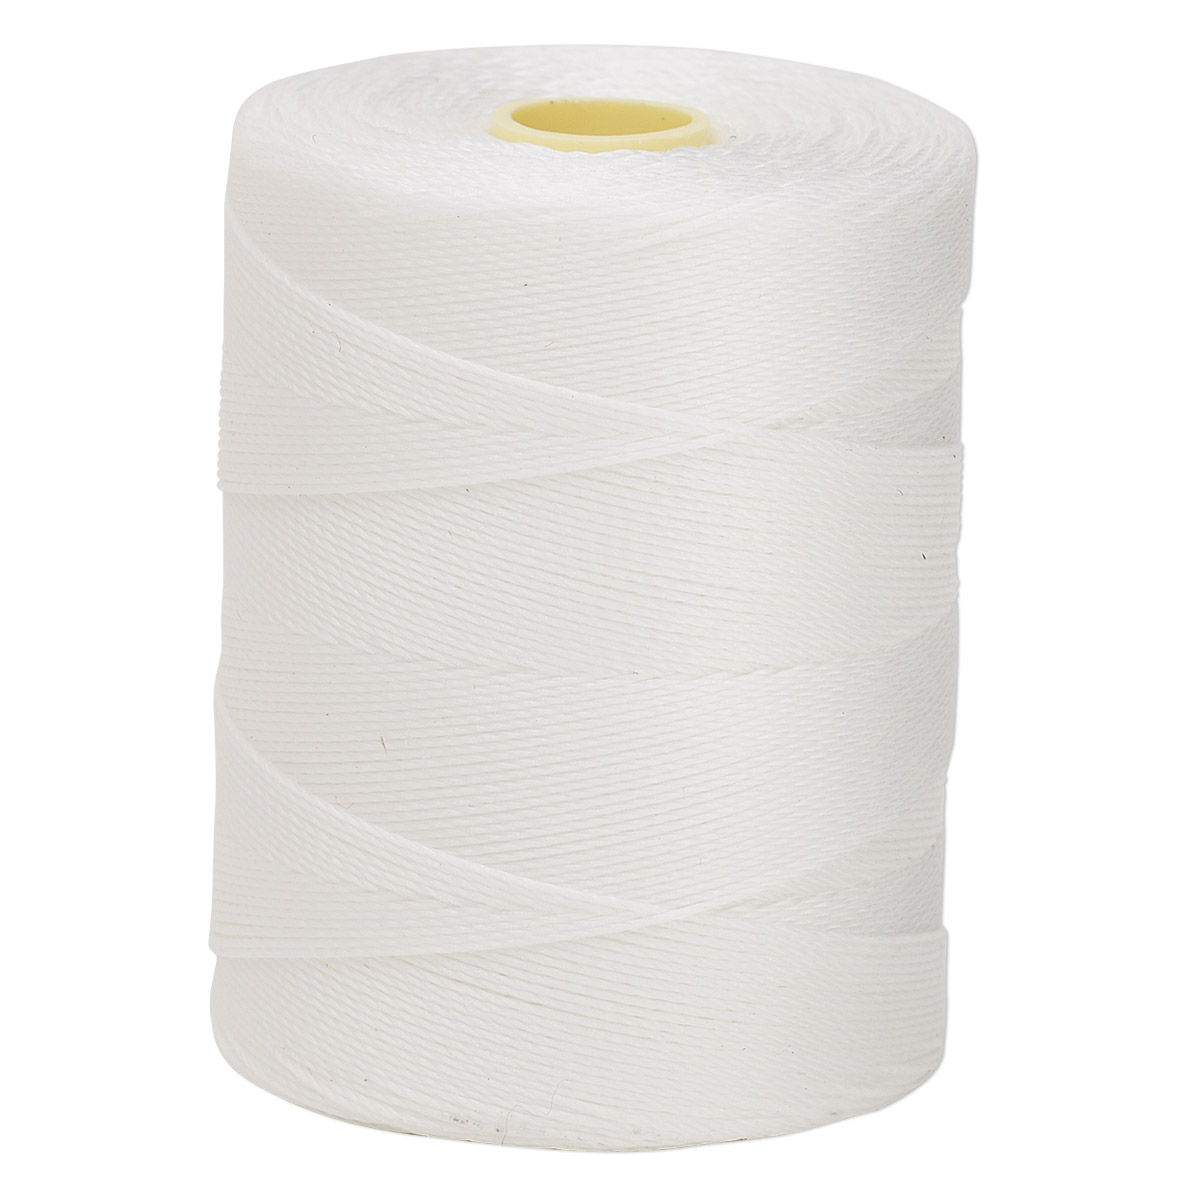 Thread, C-Lon®, nylon, white, 0.25mm diameter. Sold per 320-yard bobbin ...